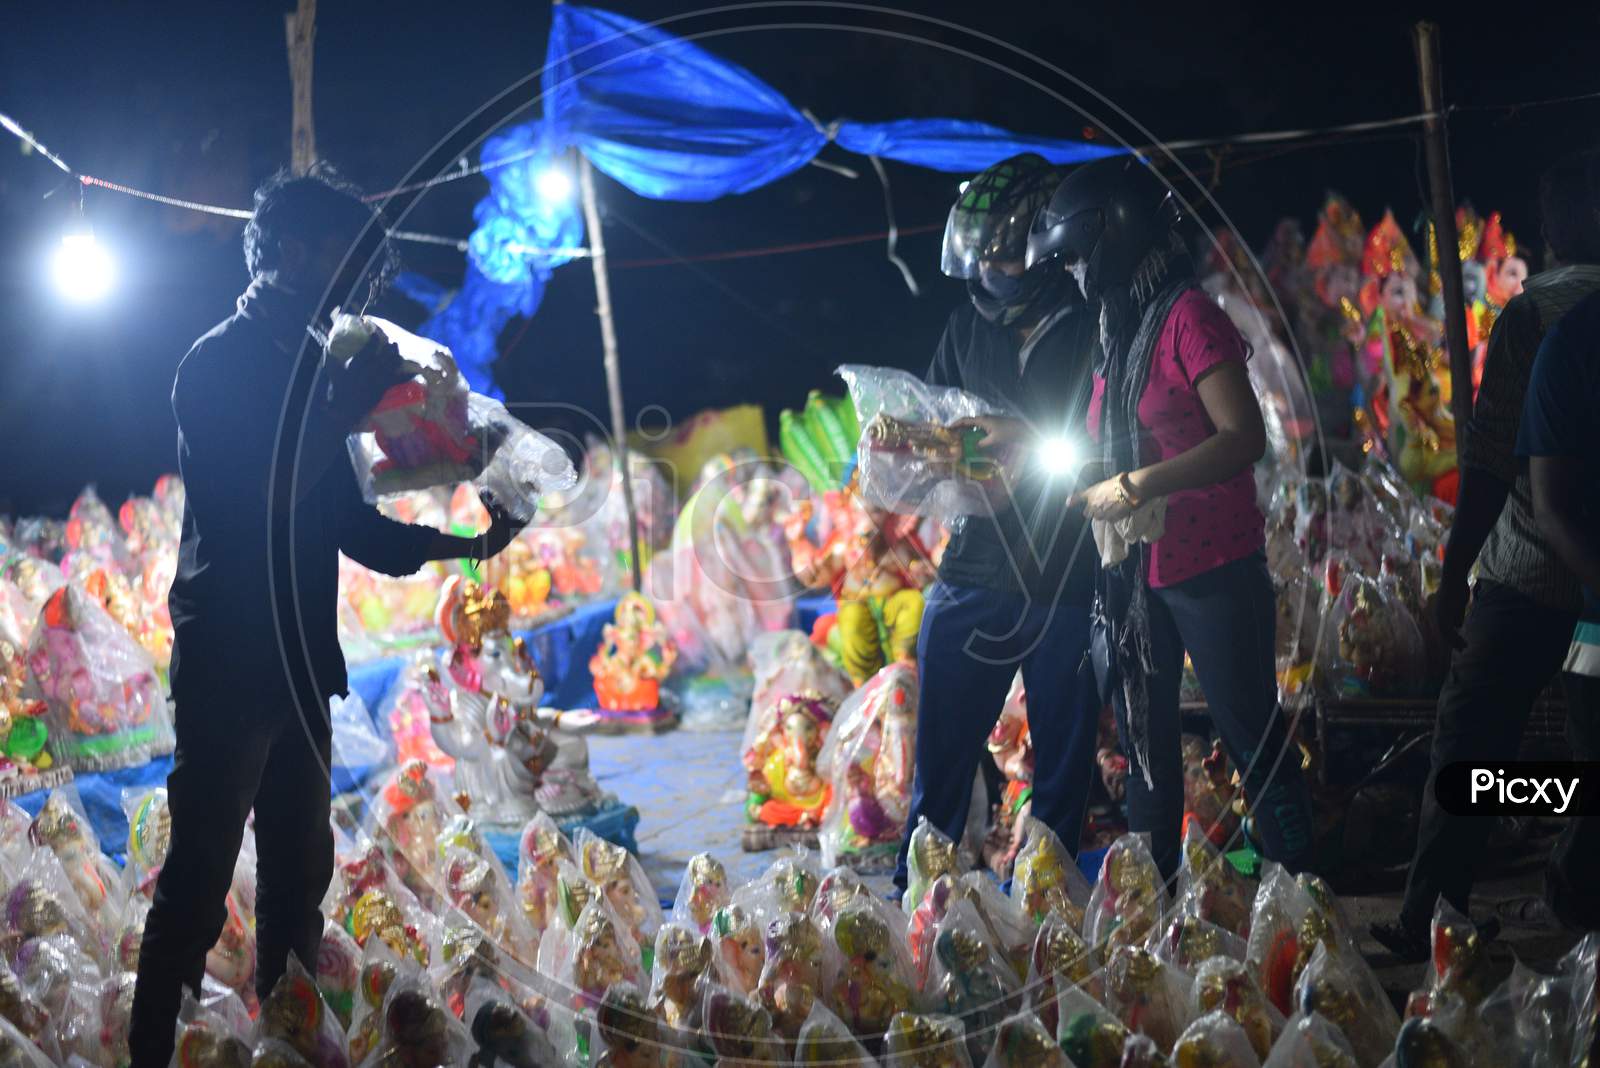 A vendor shows idols of hindu deity, Lord Ganesh ahead of Ganesh Chaturthi/ Vinayaka Chavithi festival in Hyderabad on August 21, 2020.